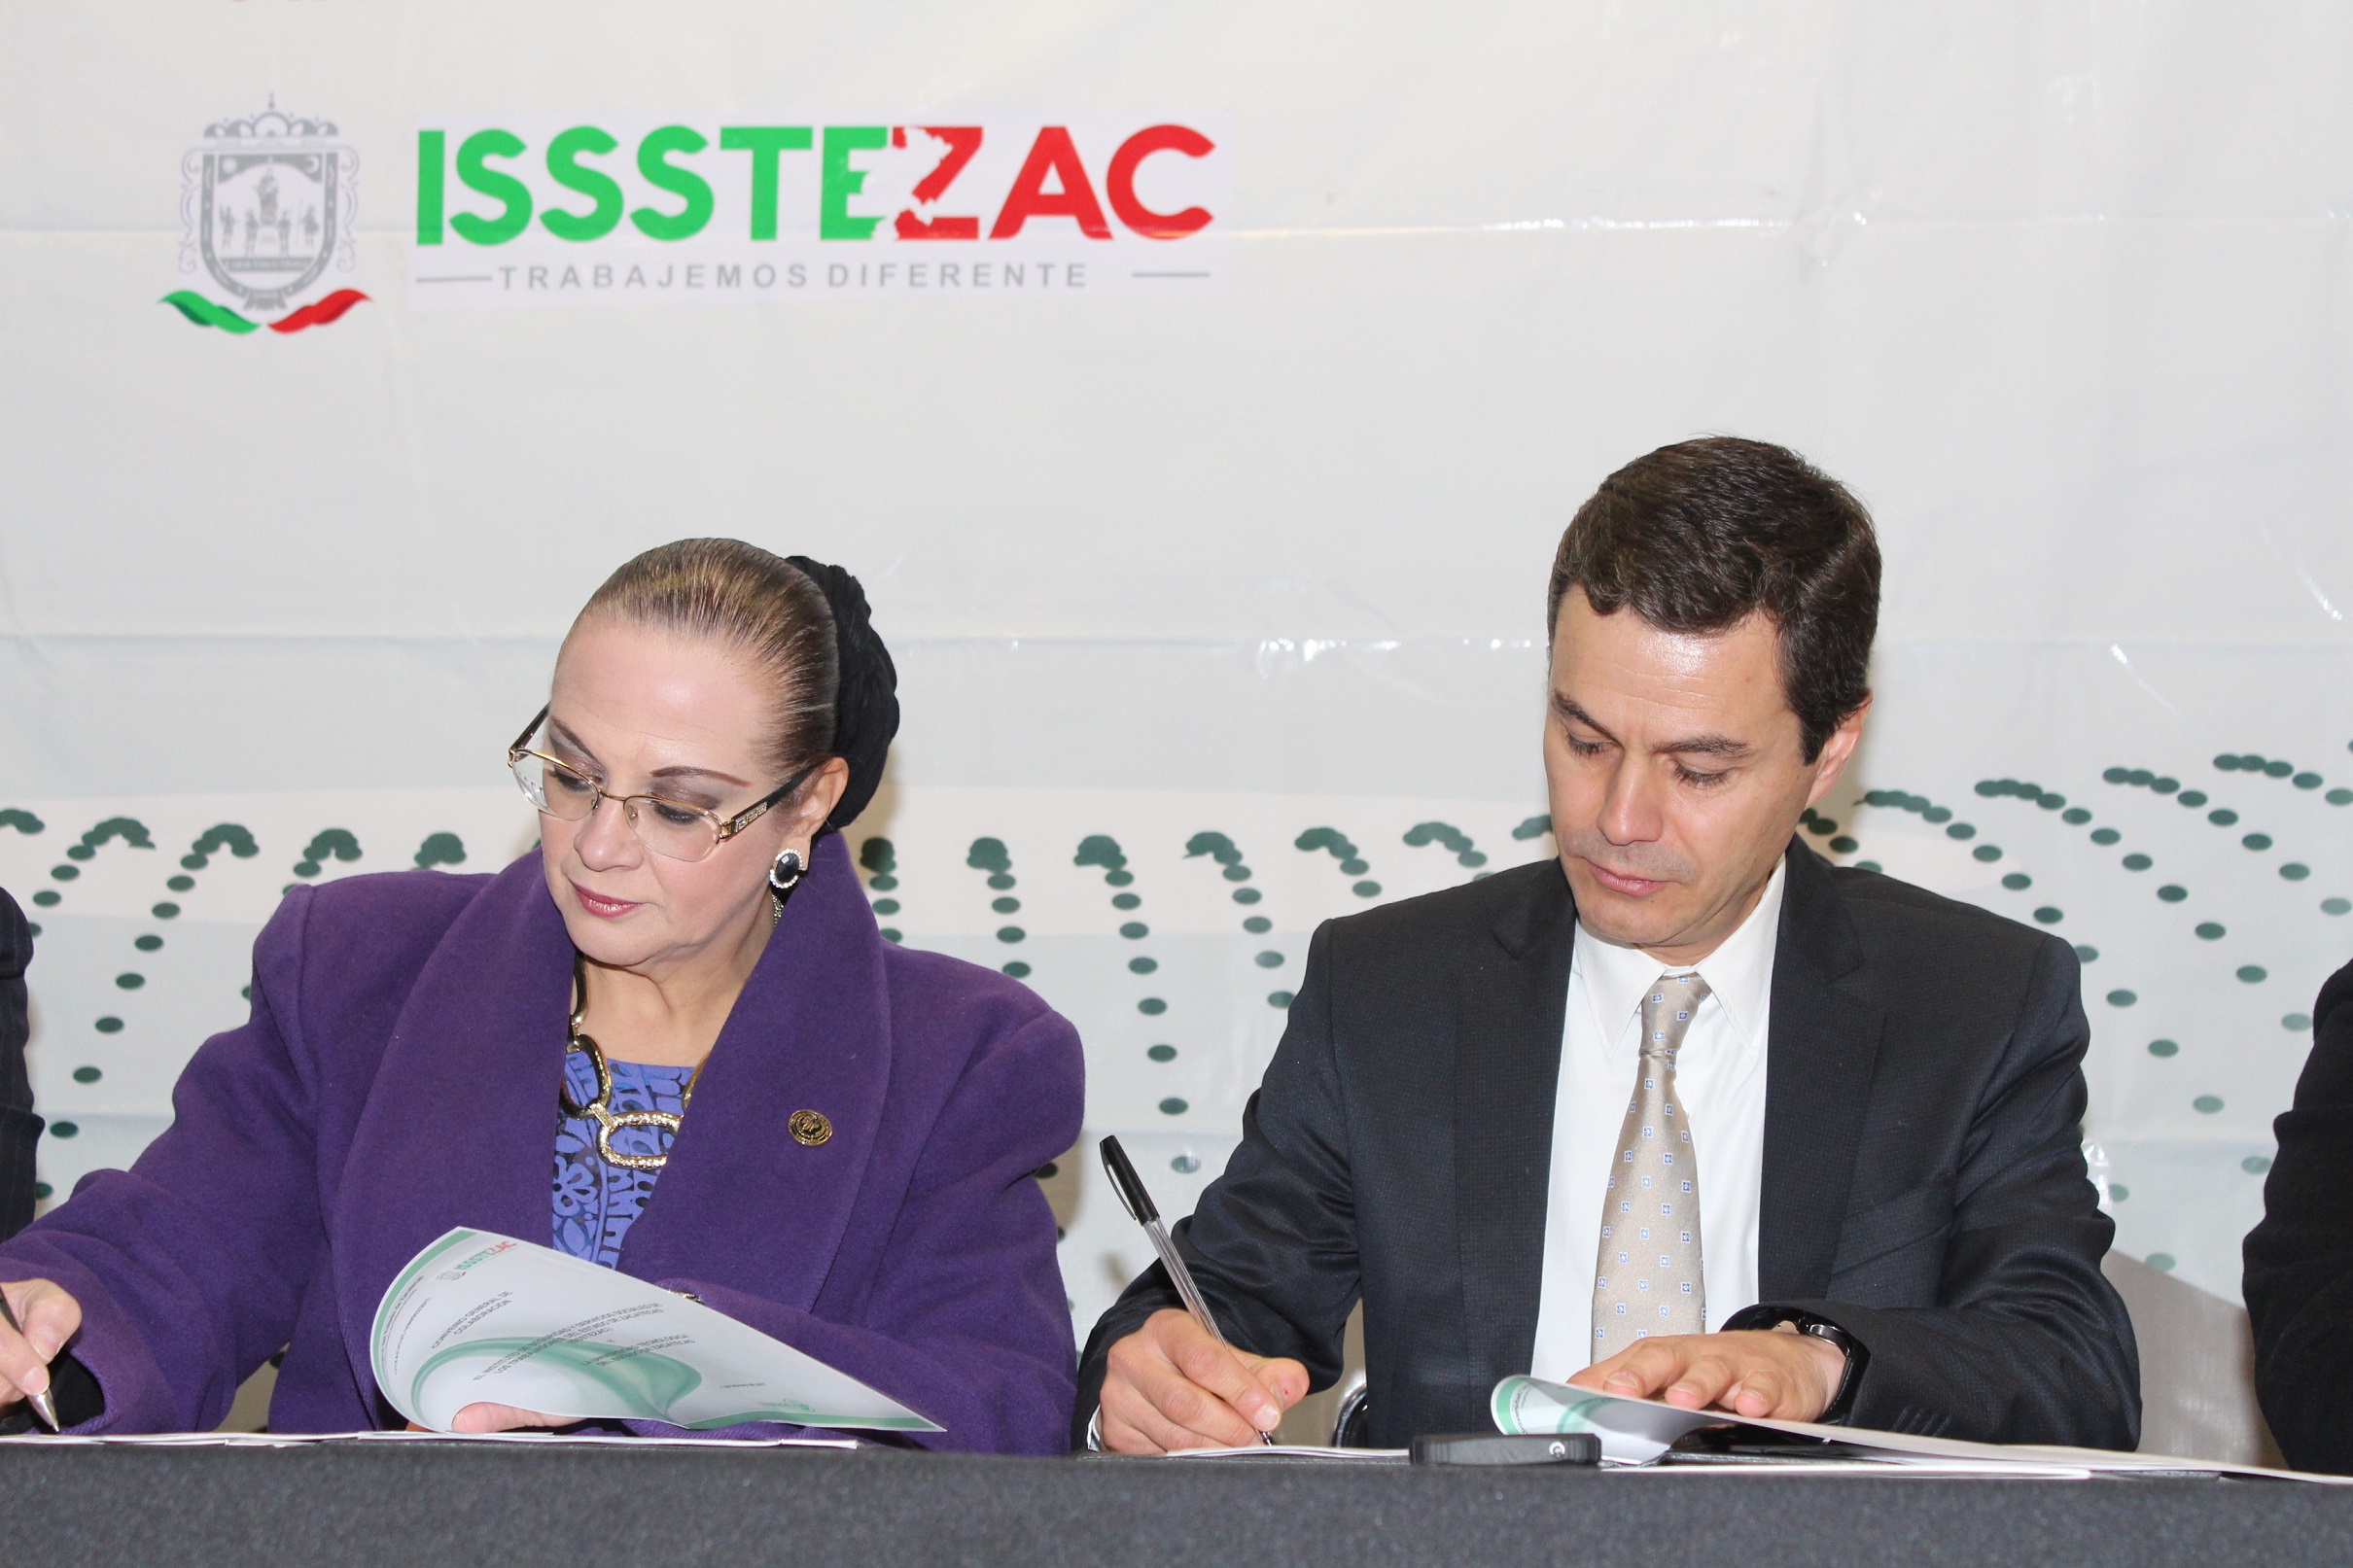 Utzac contribuye al fortalecimiento económico del Issstezac